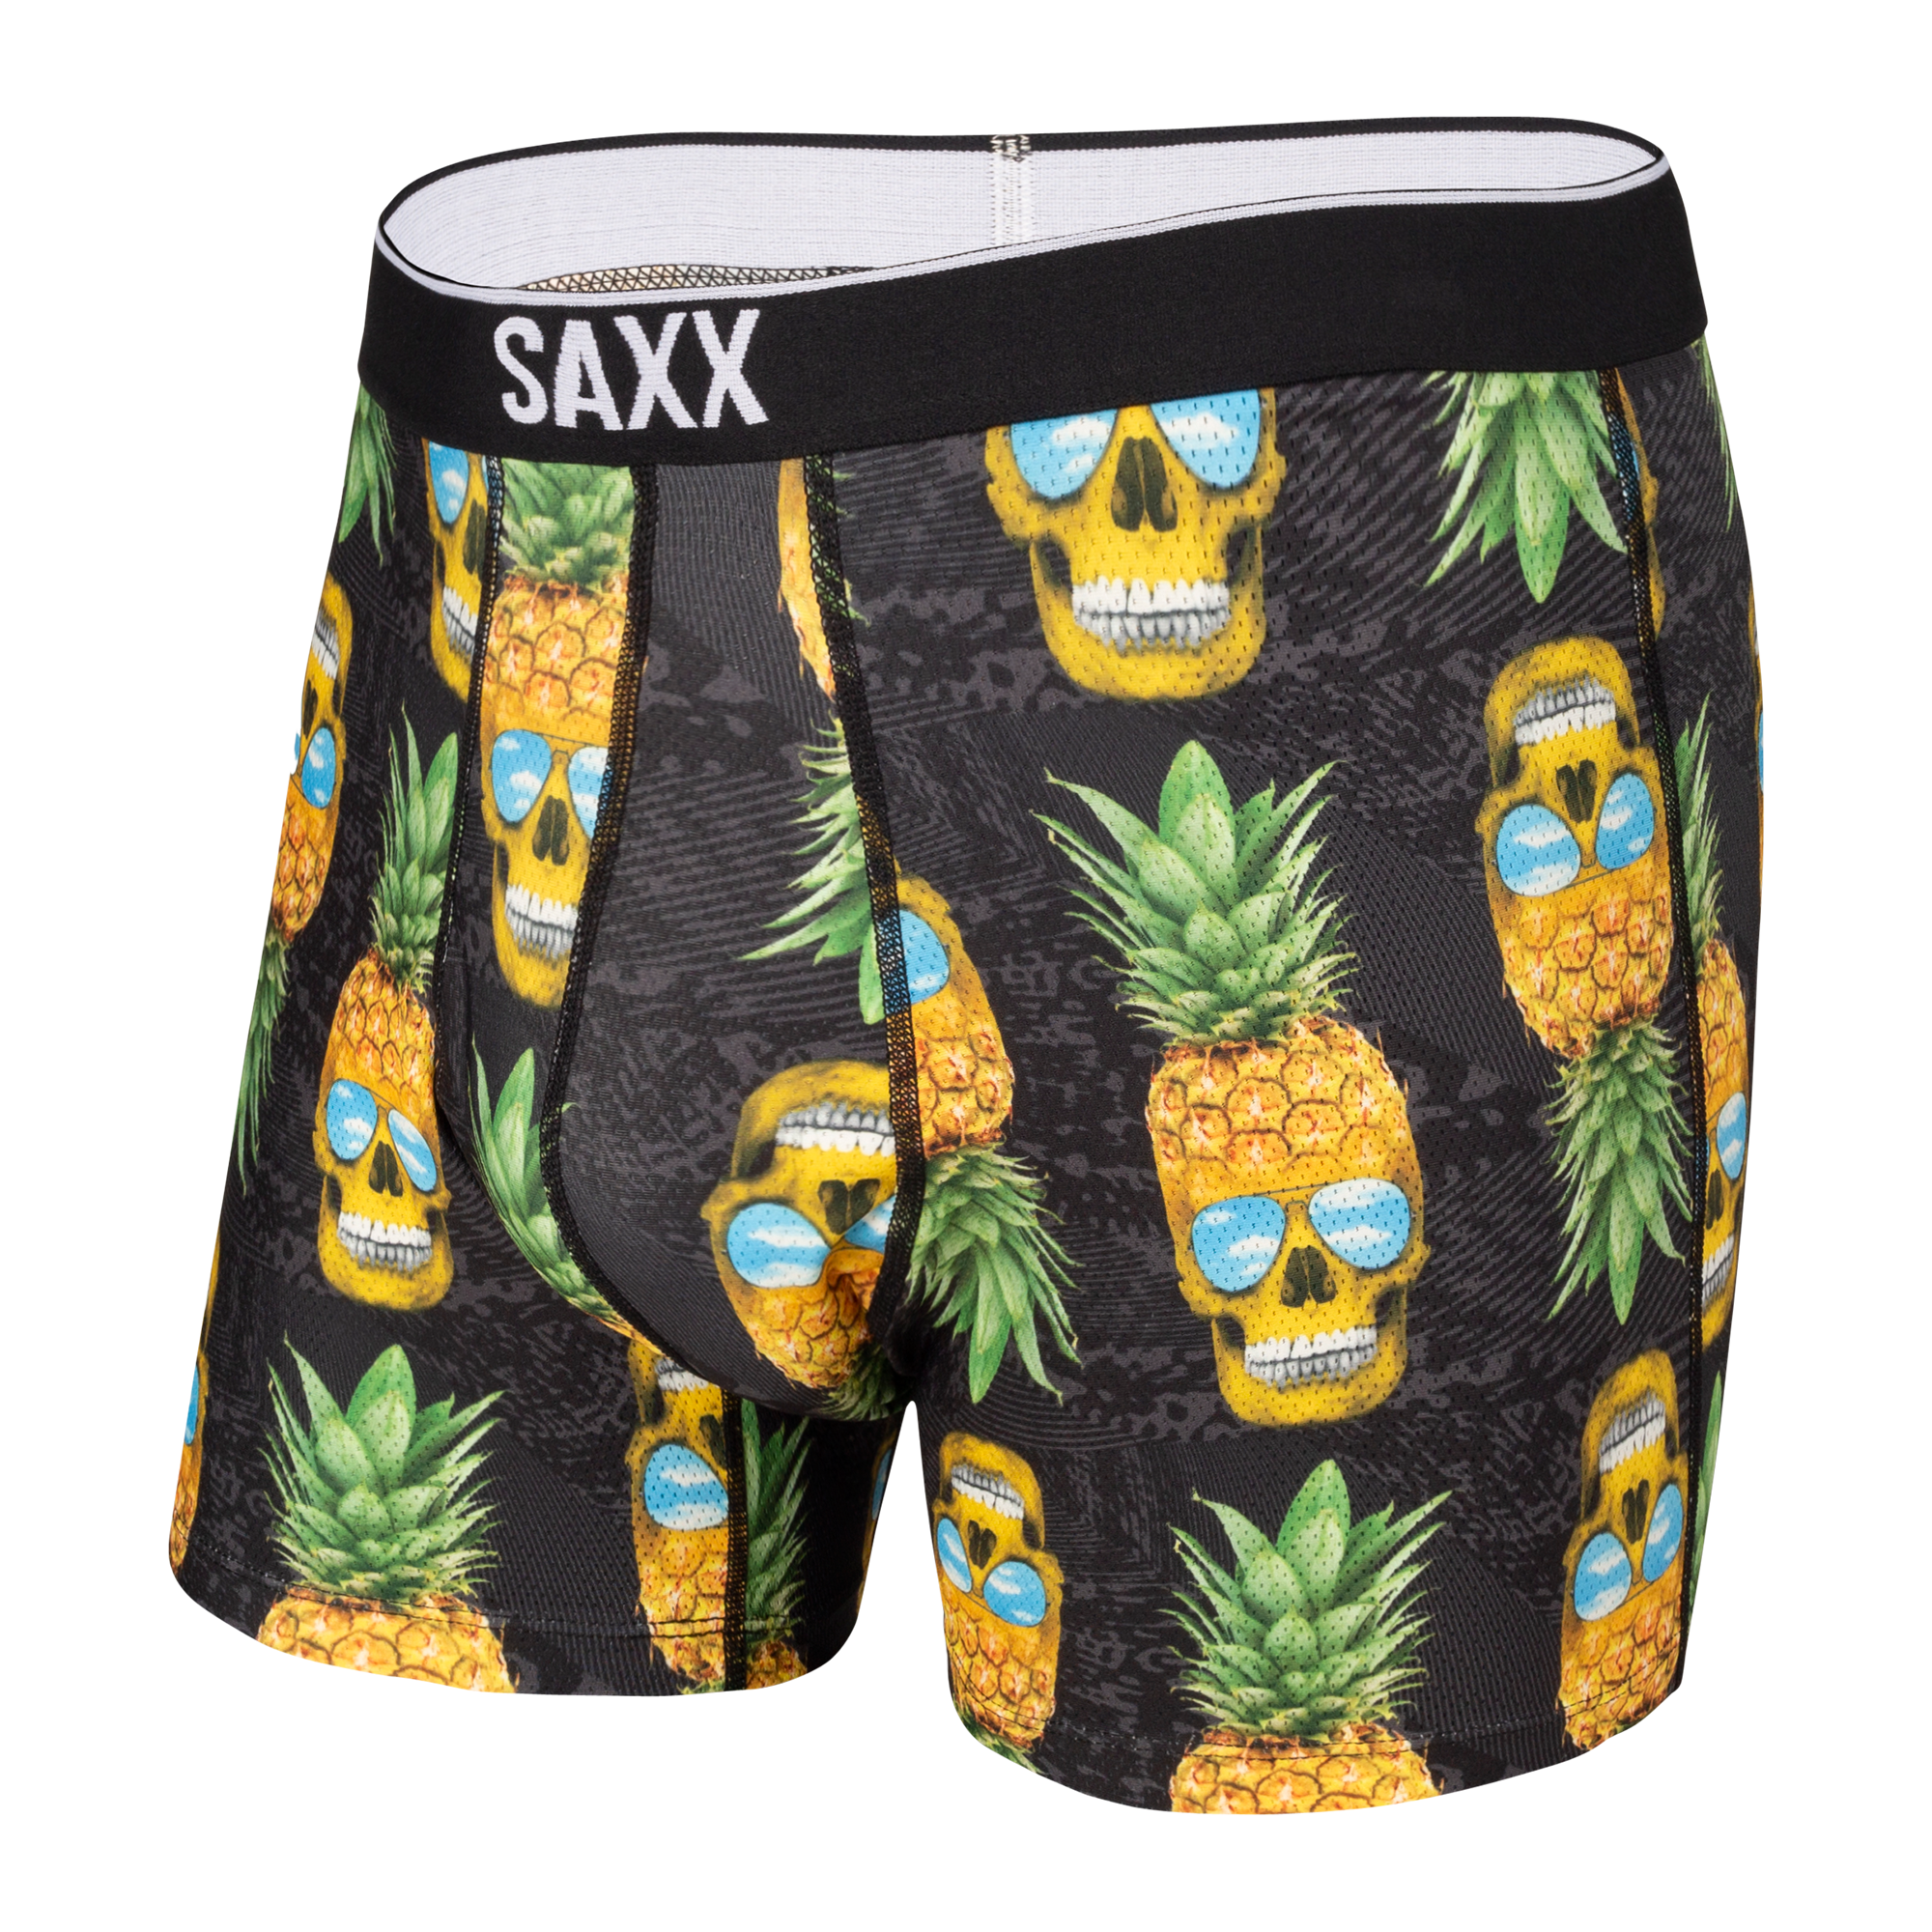 Boxer Saxx Volt Pineapple express